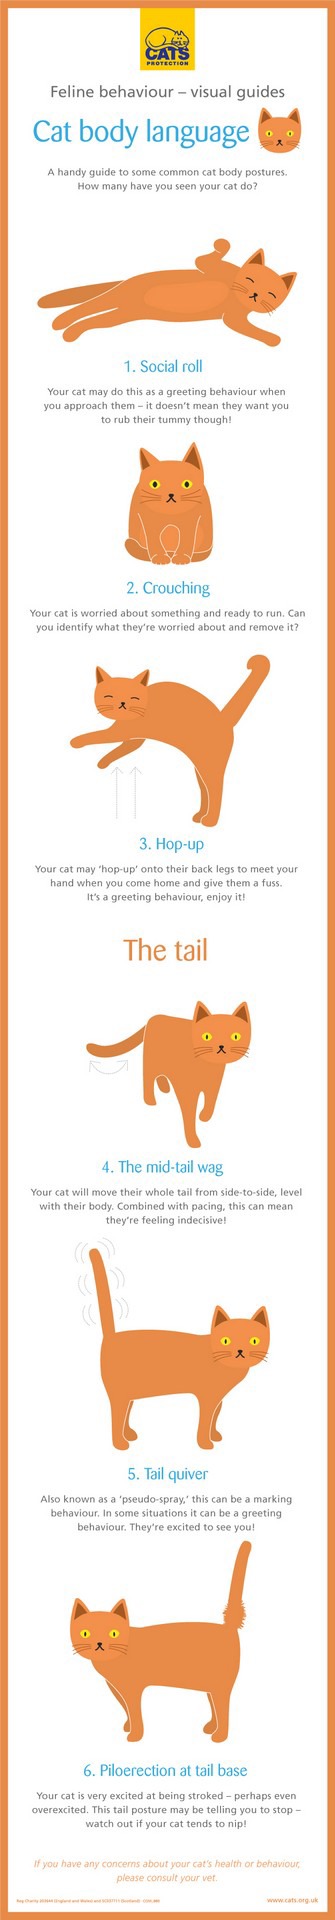 Cat body language guide